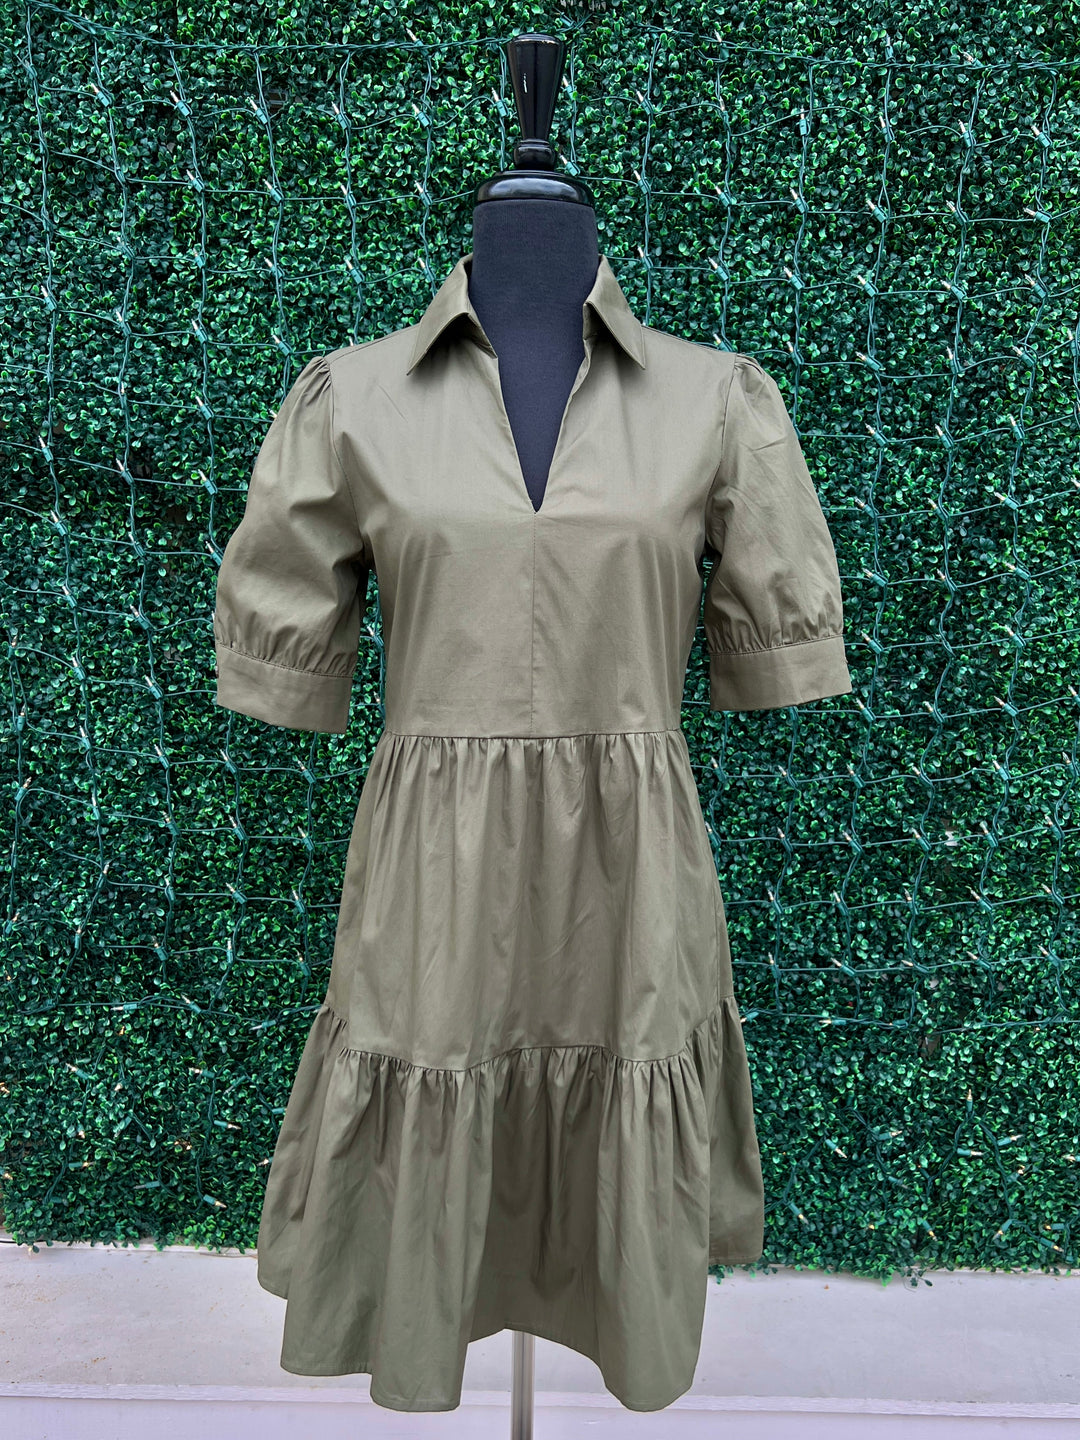 100% cotton dresses womens boutique online Molly Bracken brand olive green